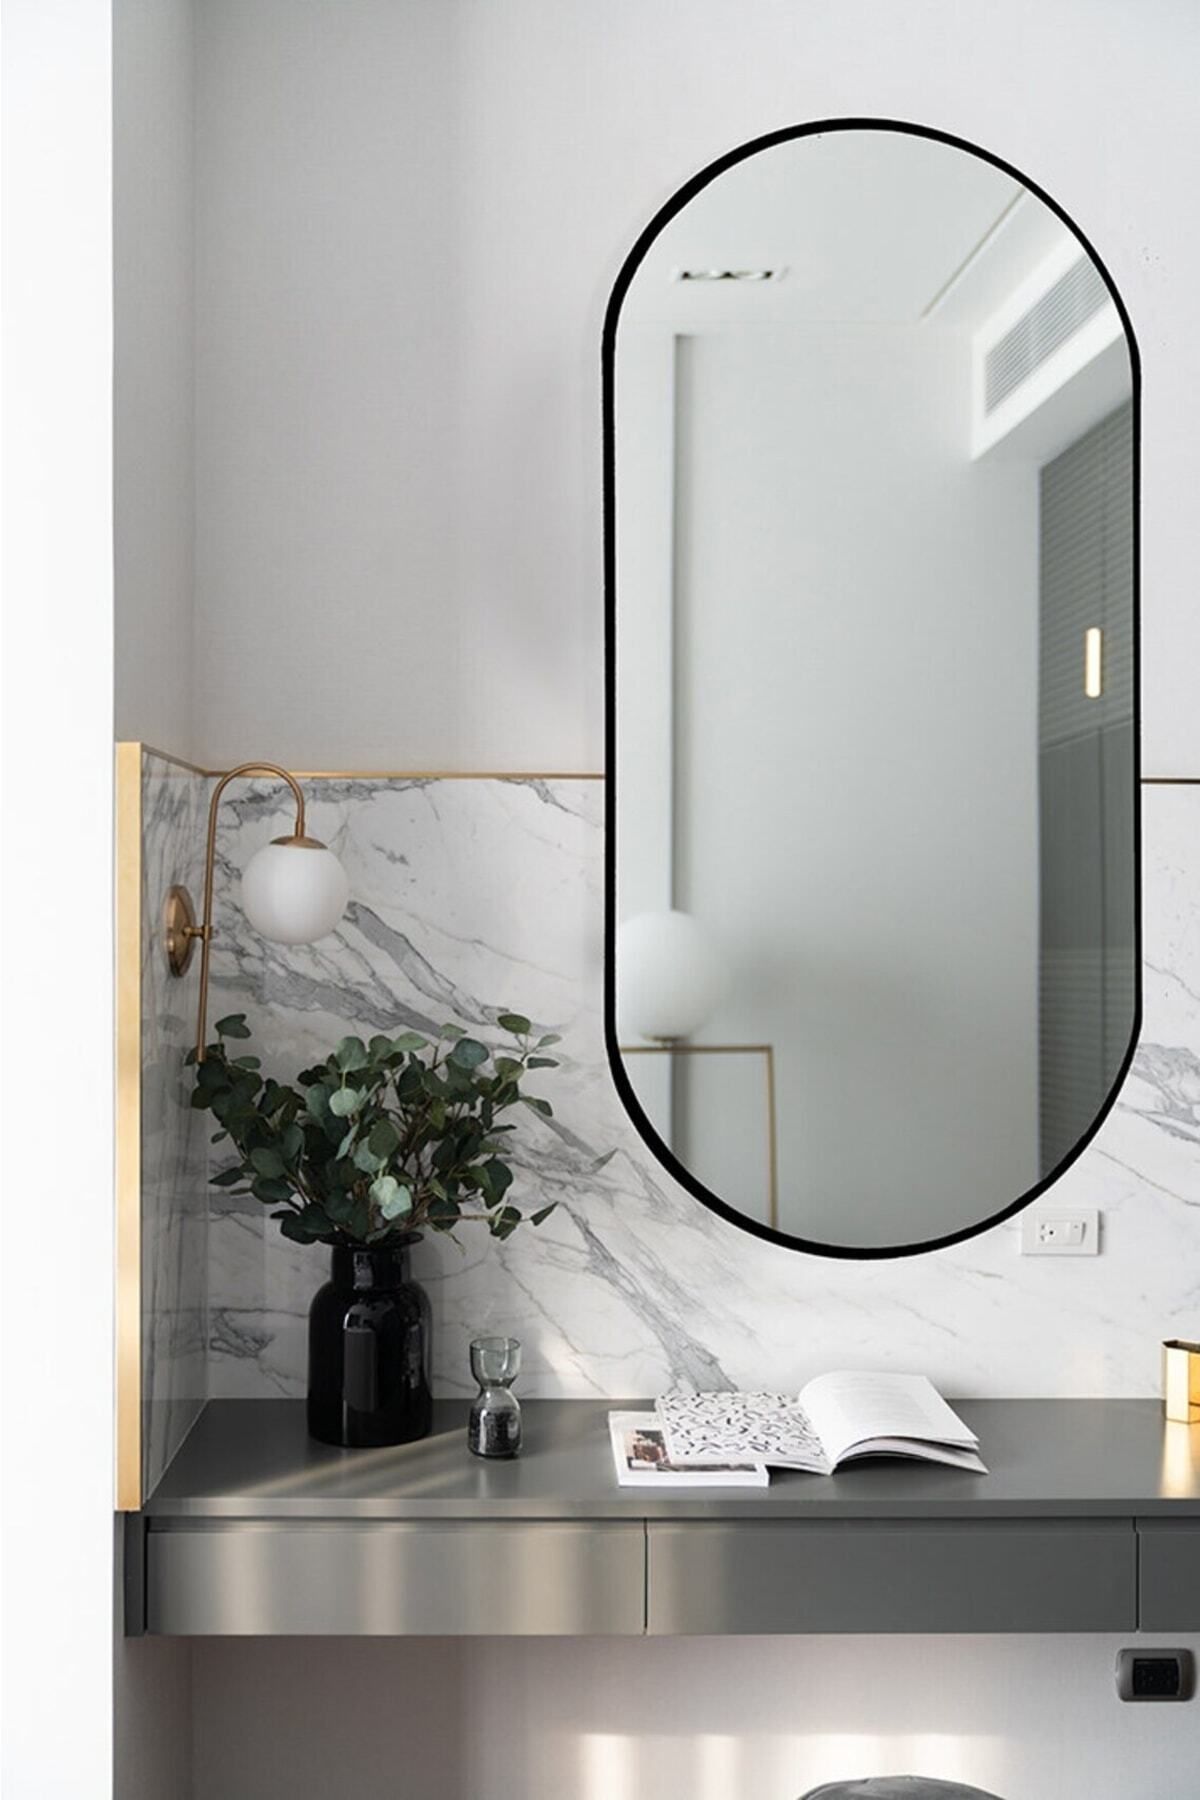 CG HOME Model Alfa Dekoratif Ayna Duvar Aynası Konsol Aynası Mdf 90cm X 50 Cm Elips Ayna